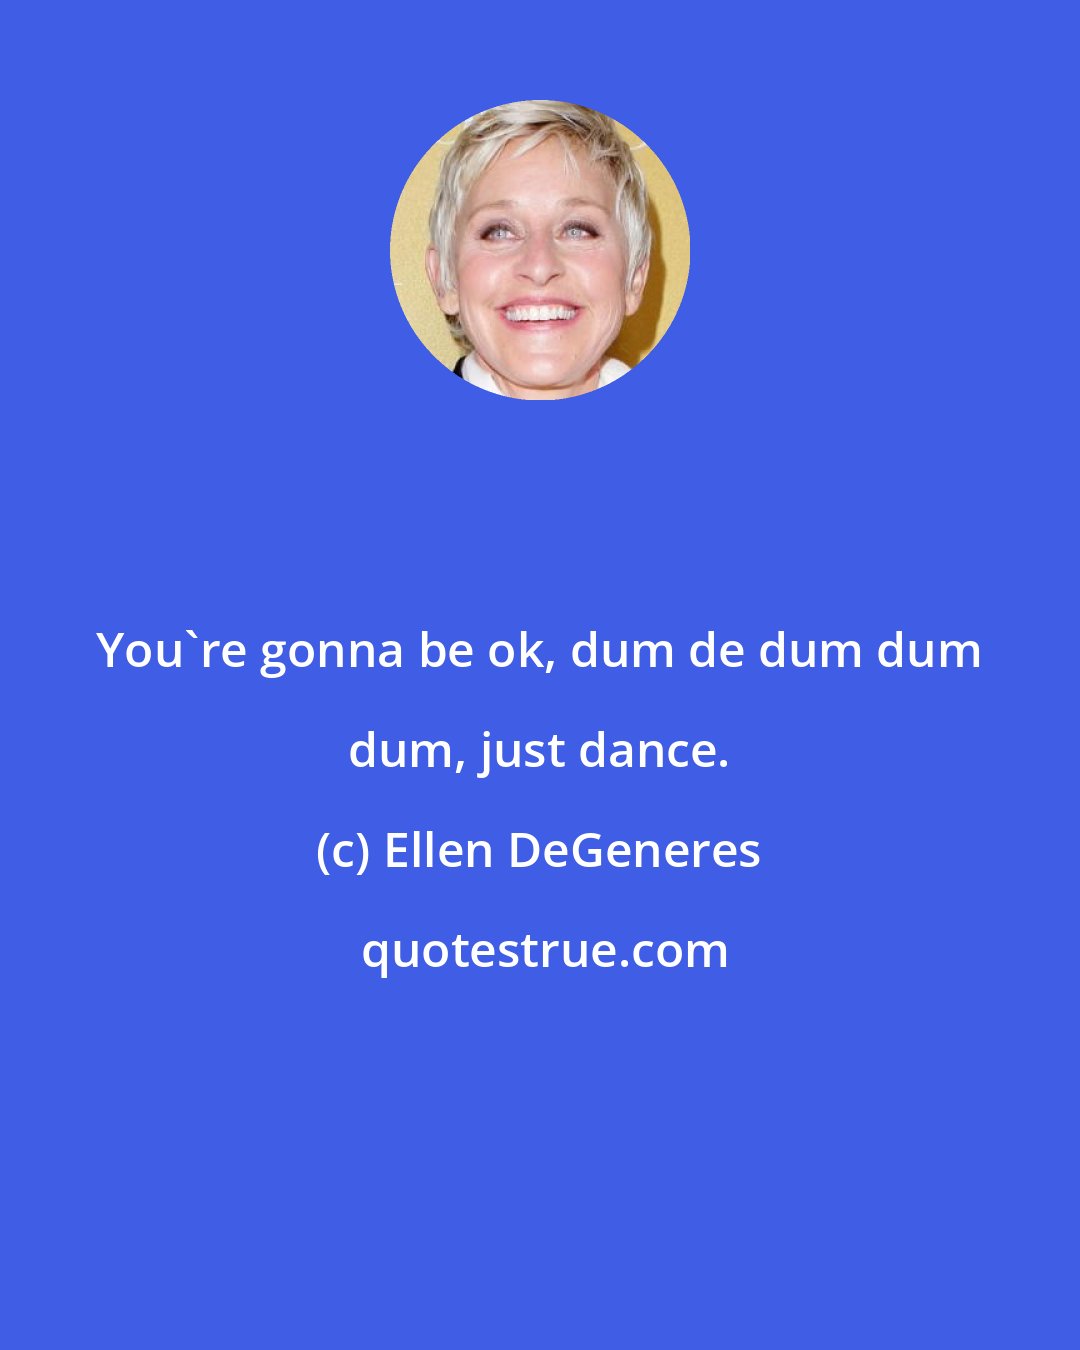 Ellen DeGeneres: You're gonna be ok, dum de dum dum dum, just dance.